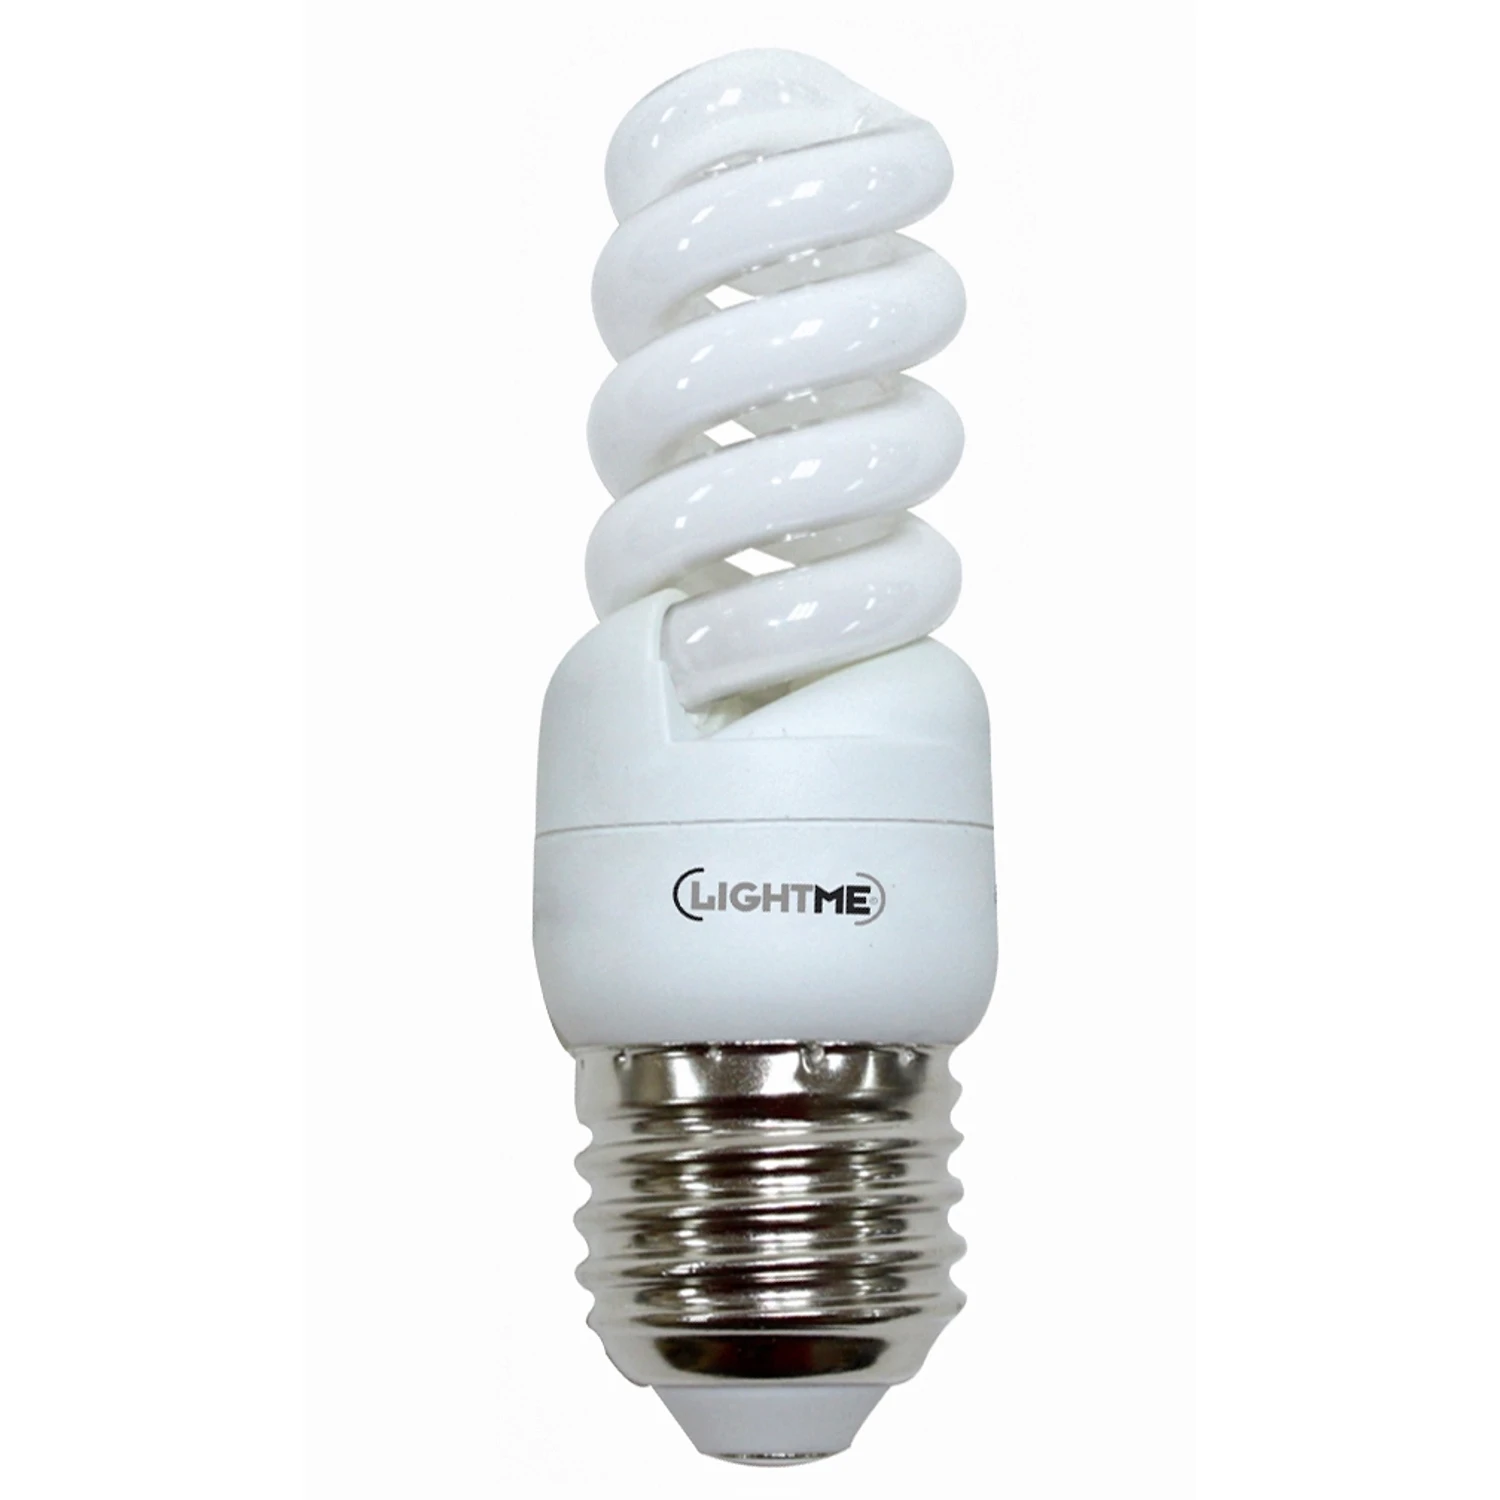  Energiesparlampe Spiralform E27 / 9 W (420 lm) Warmweiß